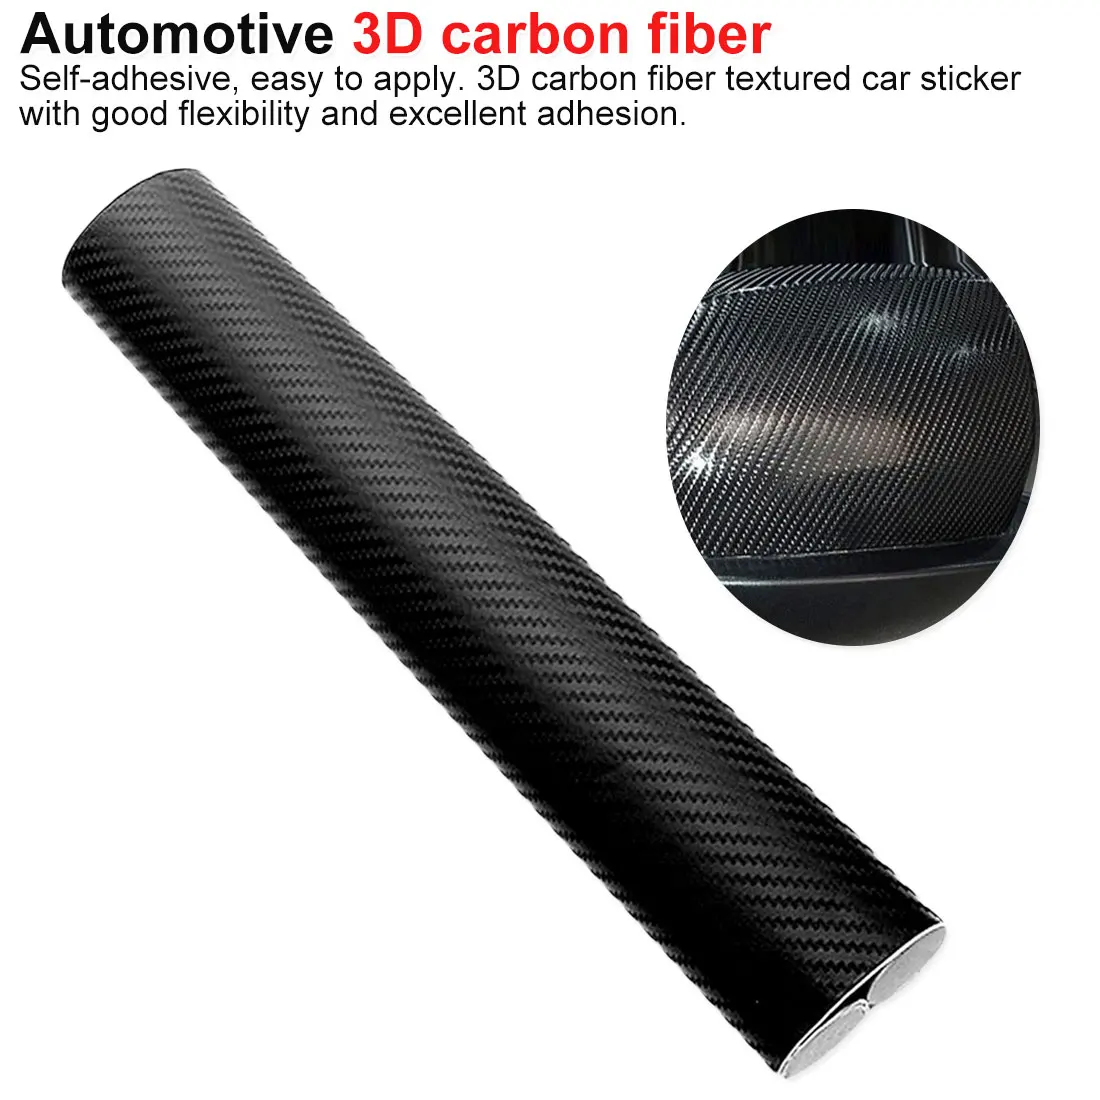 CARBON FIBRE effect textured 3D self adhesive STANDARD vinyl car wrap roll 